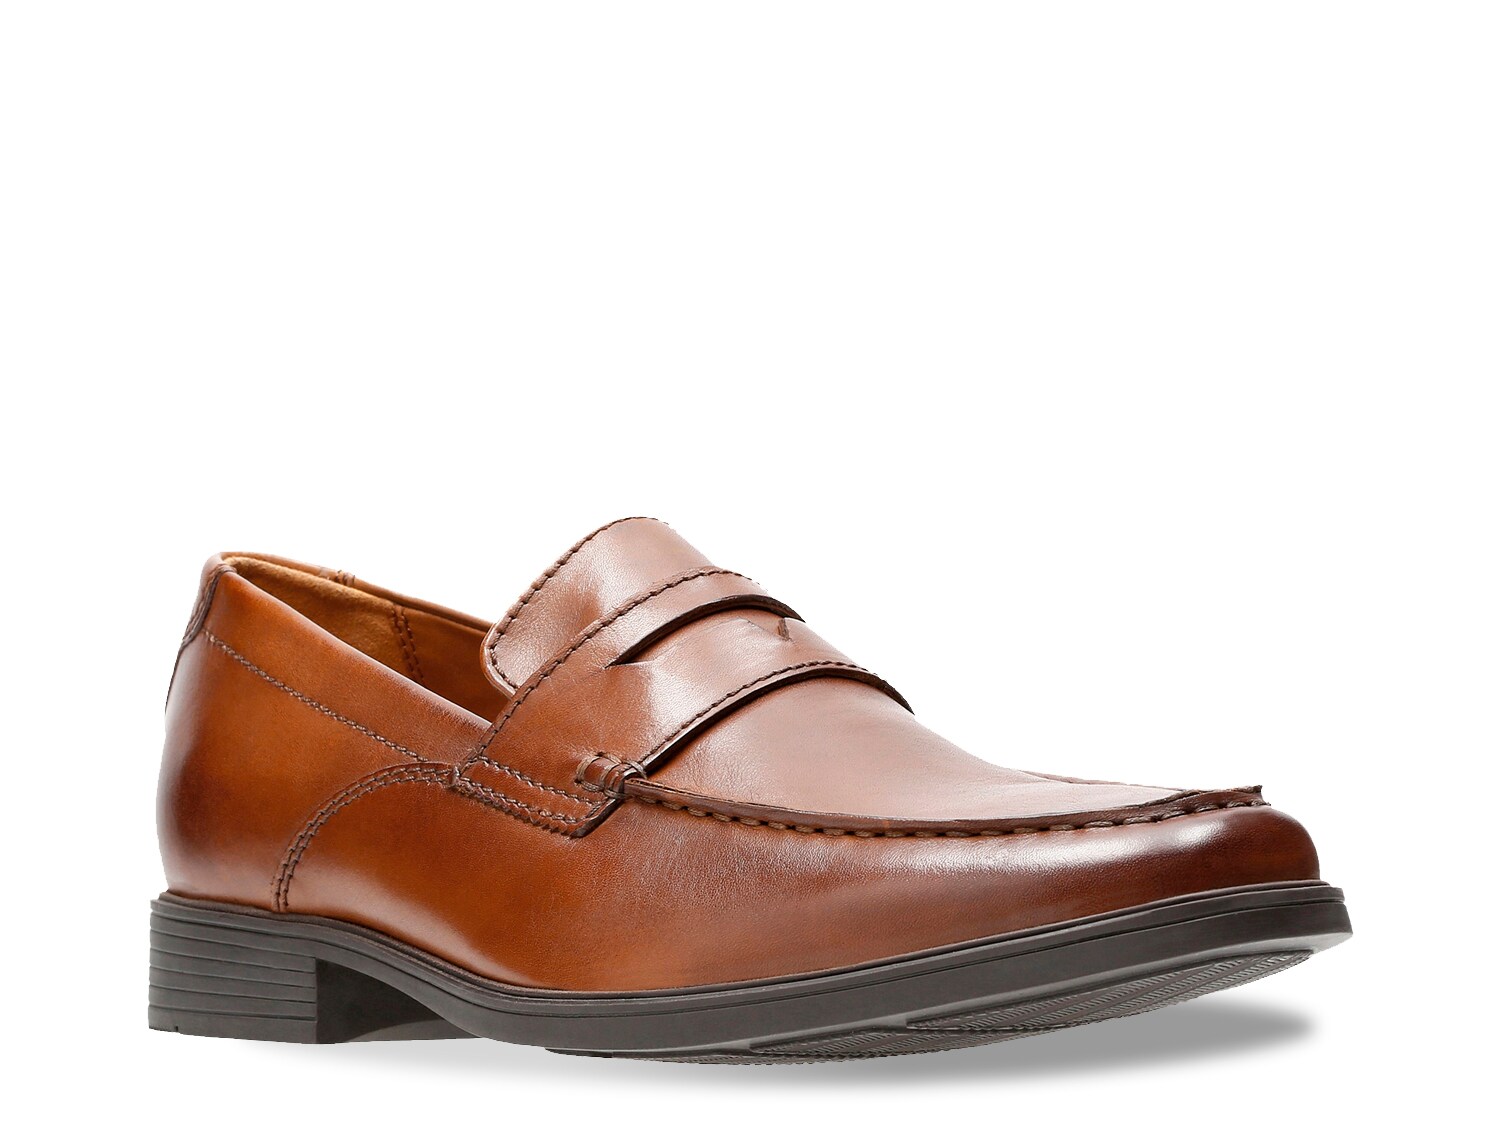 clarks men's tilden way leather penny loafers